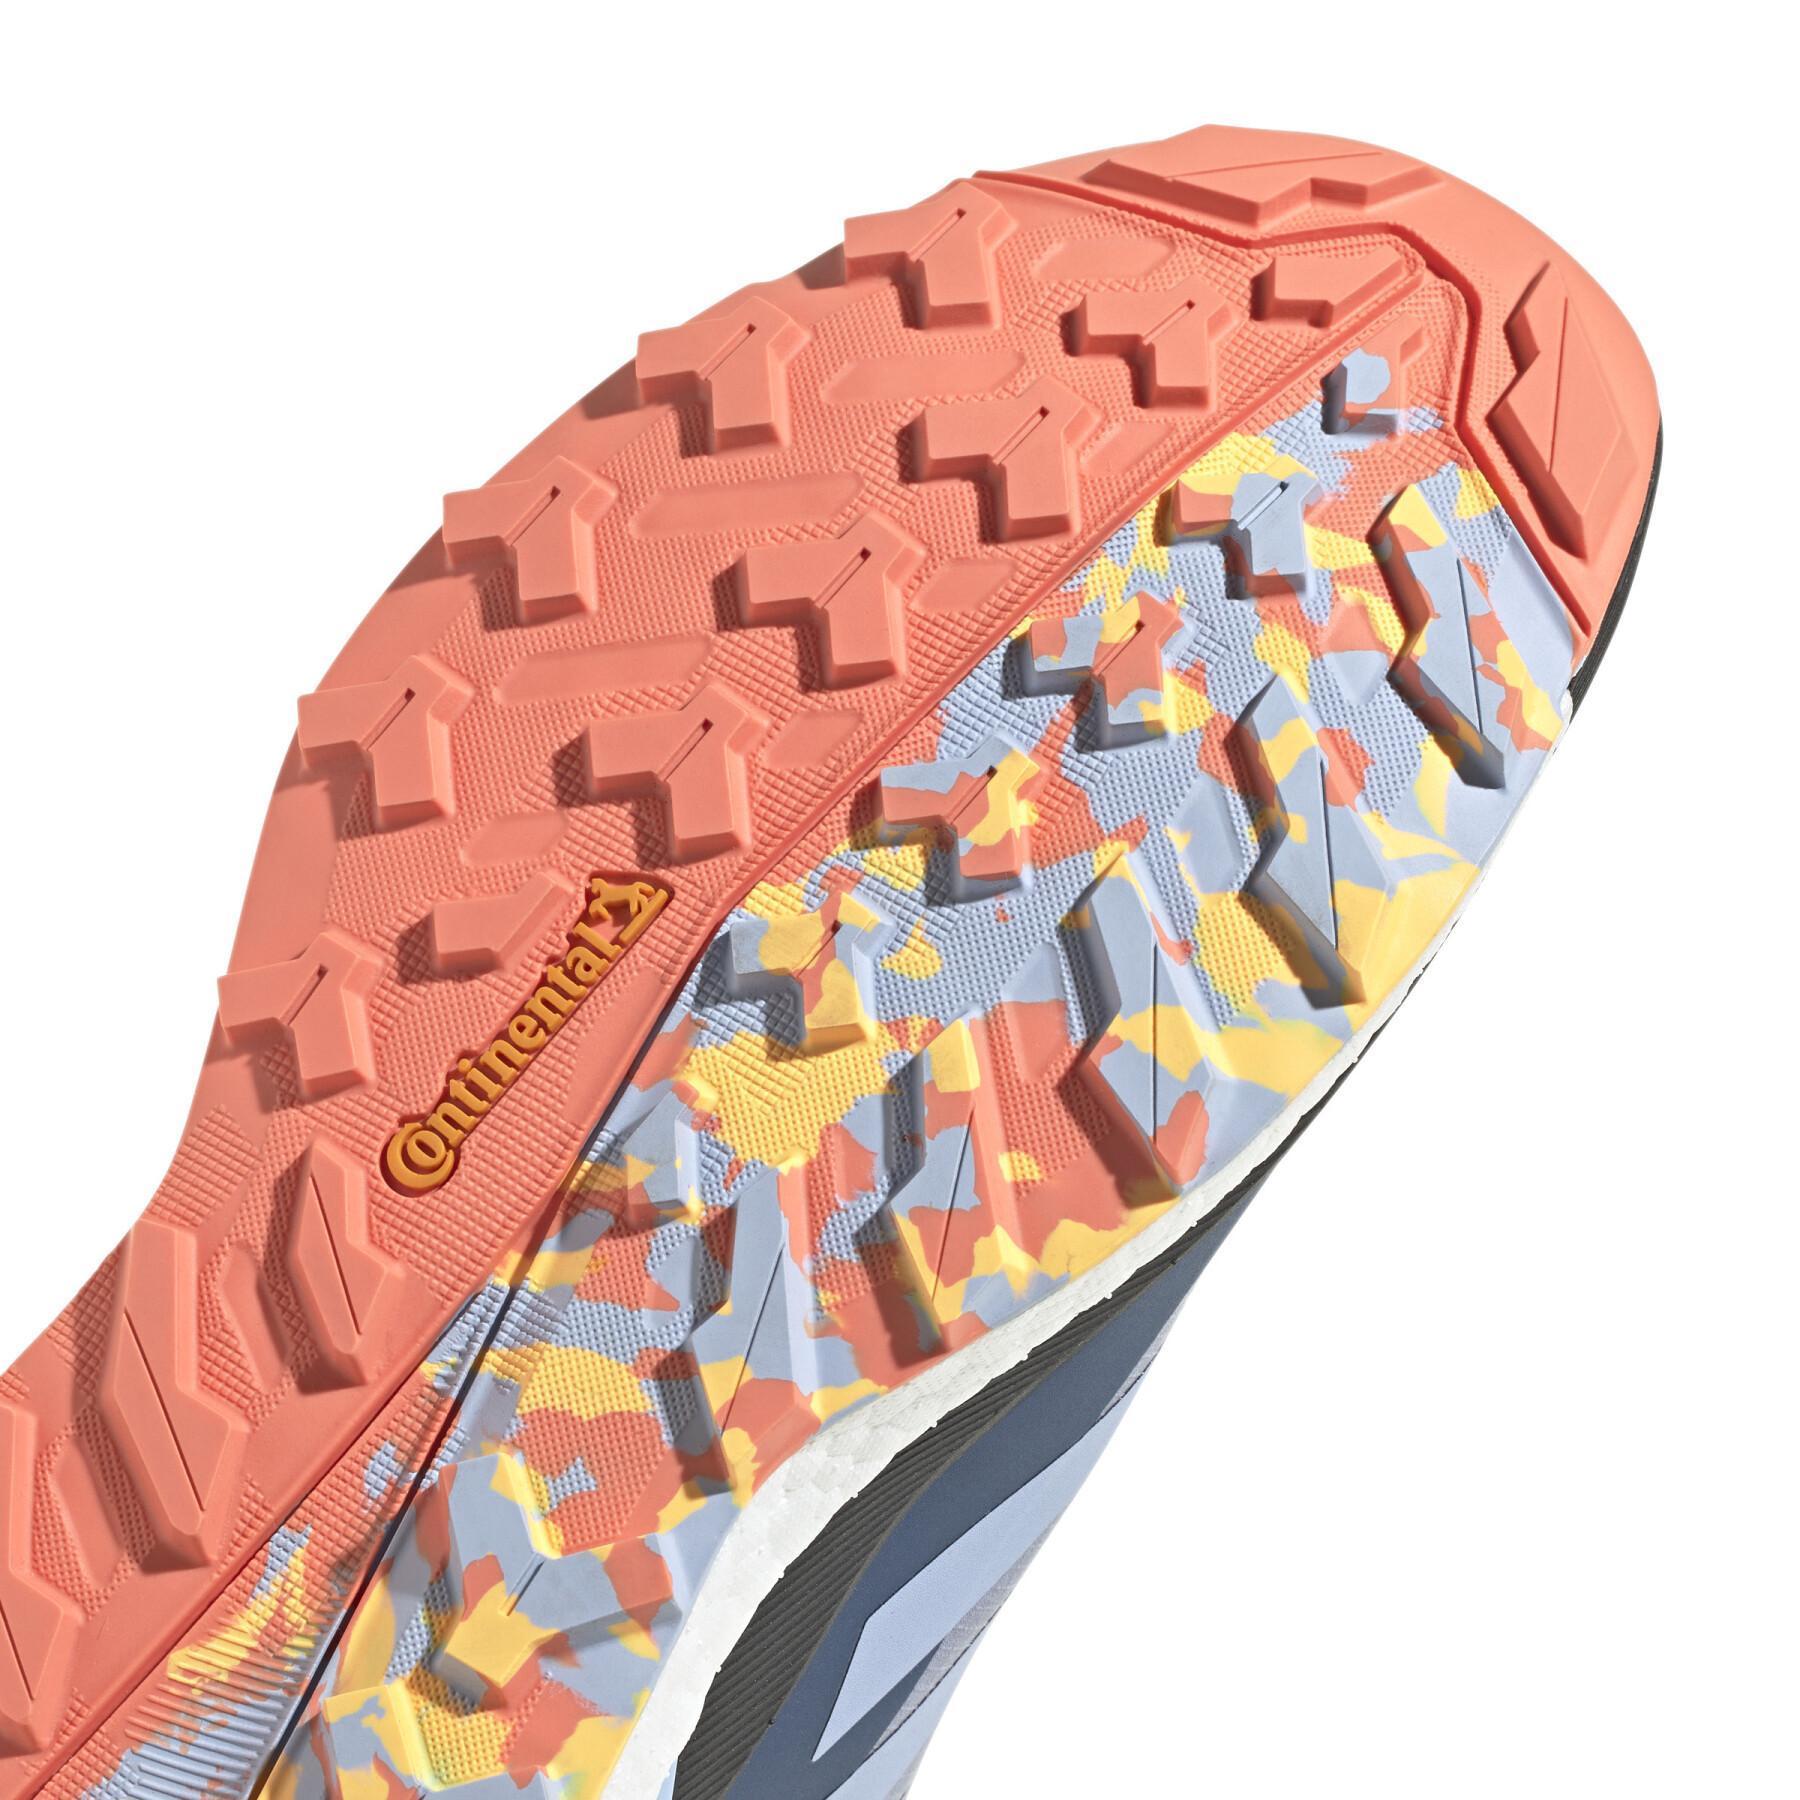 Chaussures de randonnée adidas Terrex Free Hiker GORE-TEX 2.0